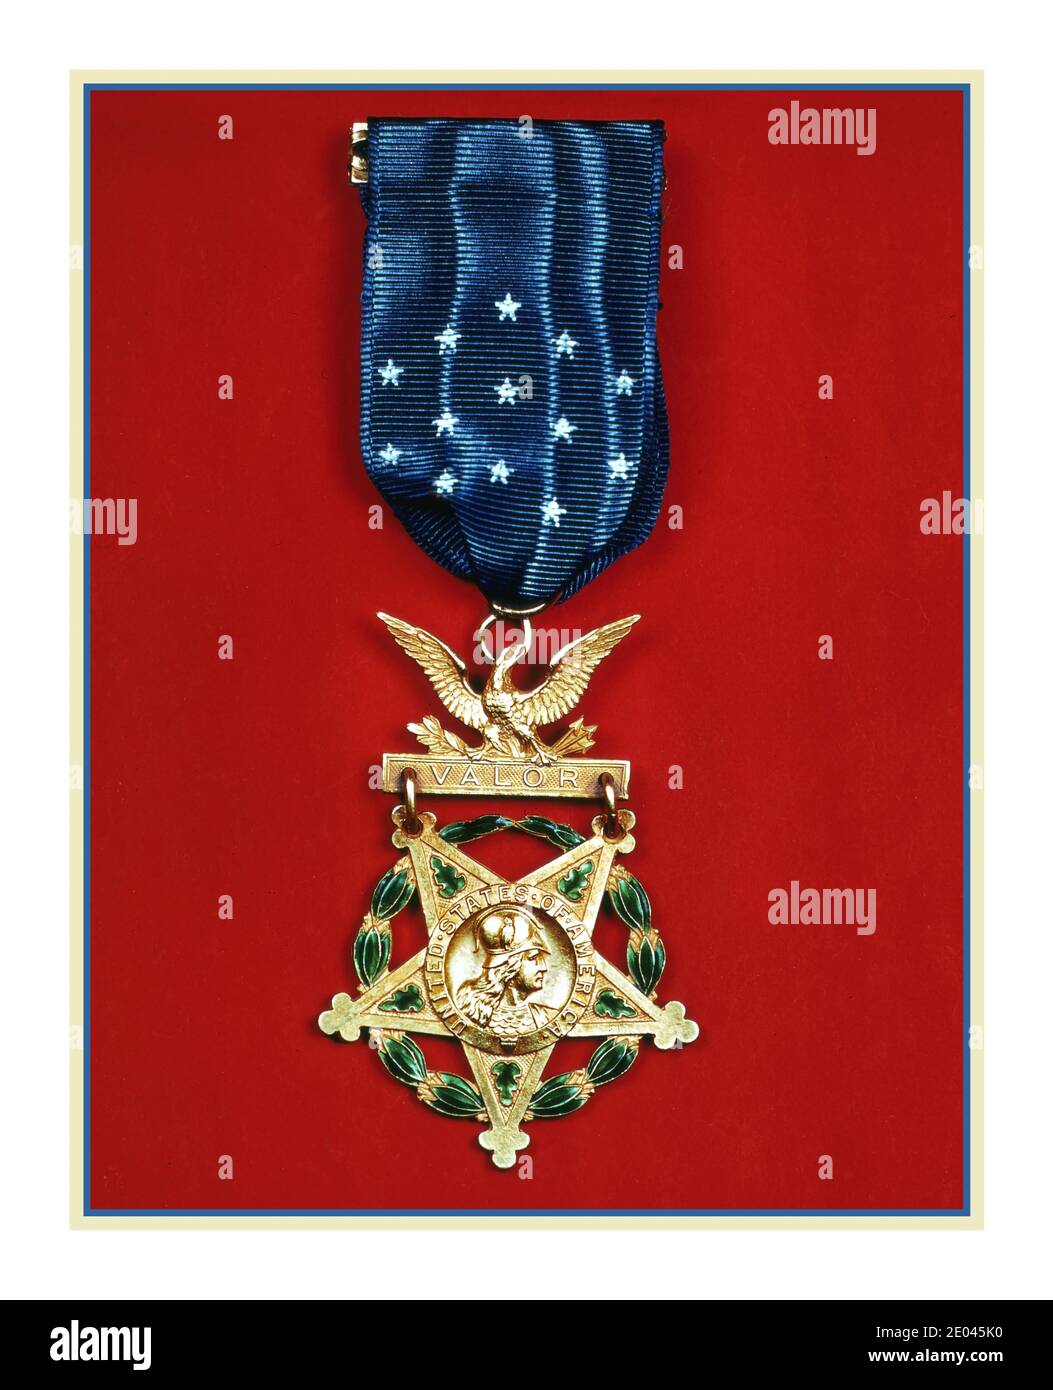 Medal of Honor USA WW2 American Medal for Exceptional Tapour [Medal of Honor] [Zwischen 1941 und 1945] im Zweiten Weltkrieg wurde die 1939-1945 Valour Medal des Congressional Medal of Honor (Ehrenmedaille des Kongresses) verliehen. USA Office of war Information, 1944. Amerika, USA Stockfoto